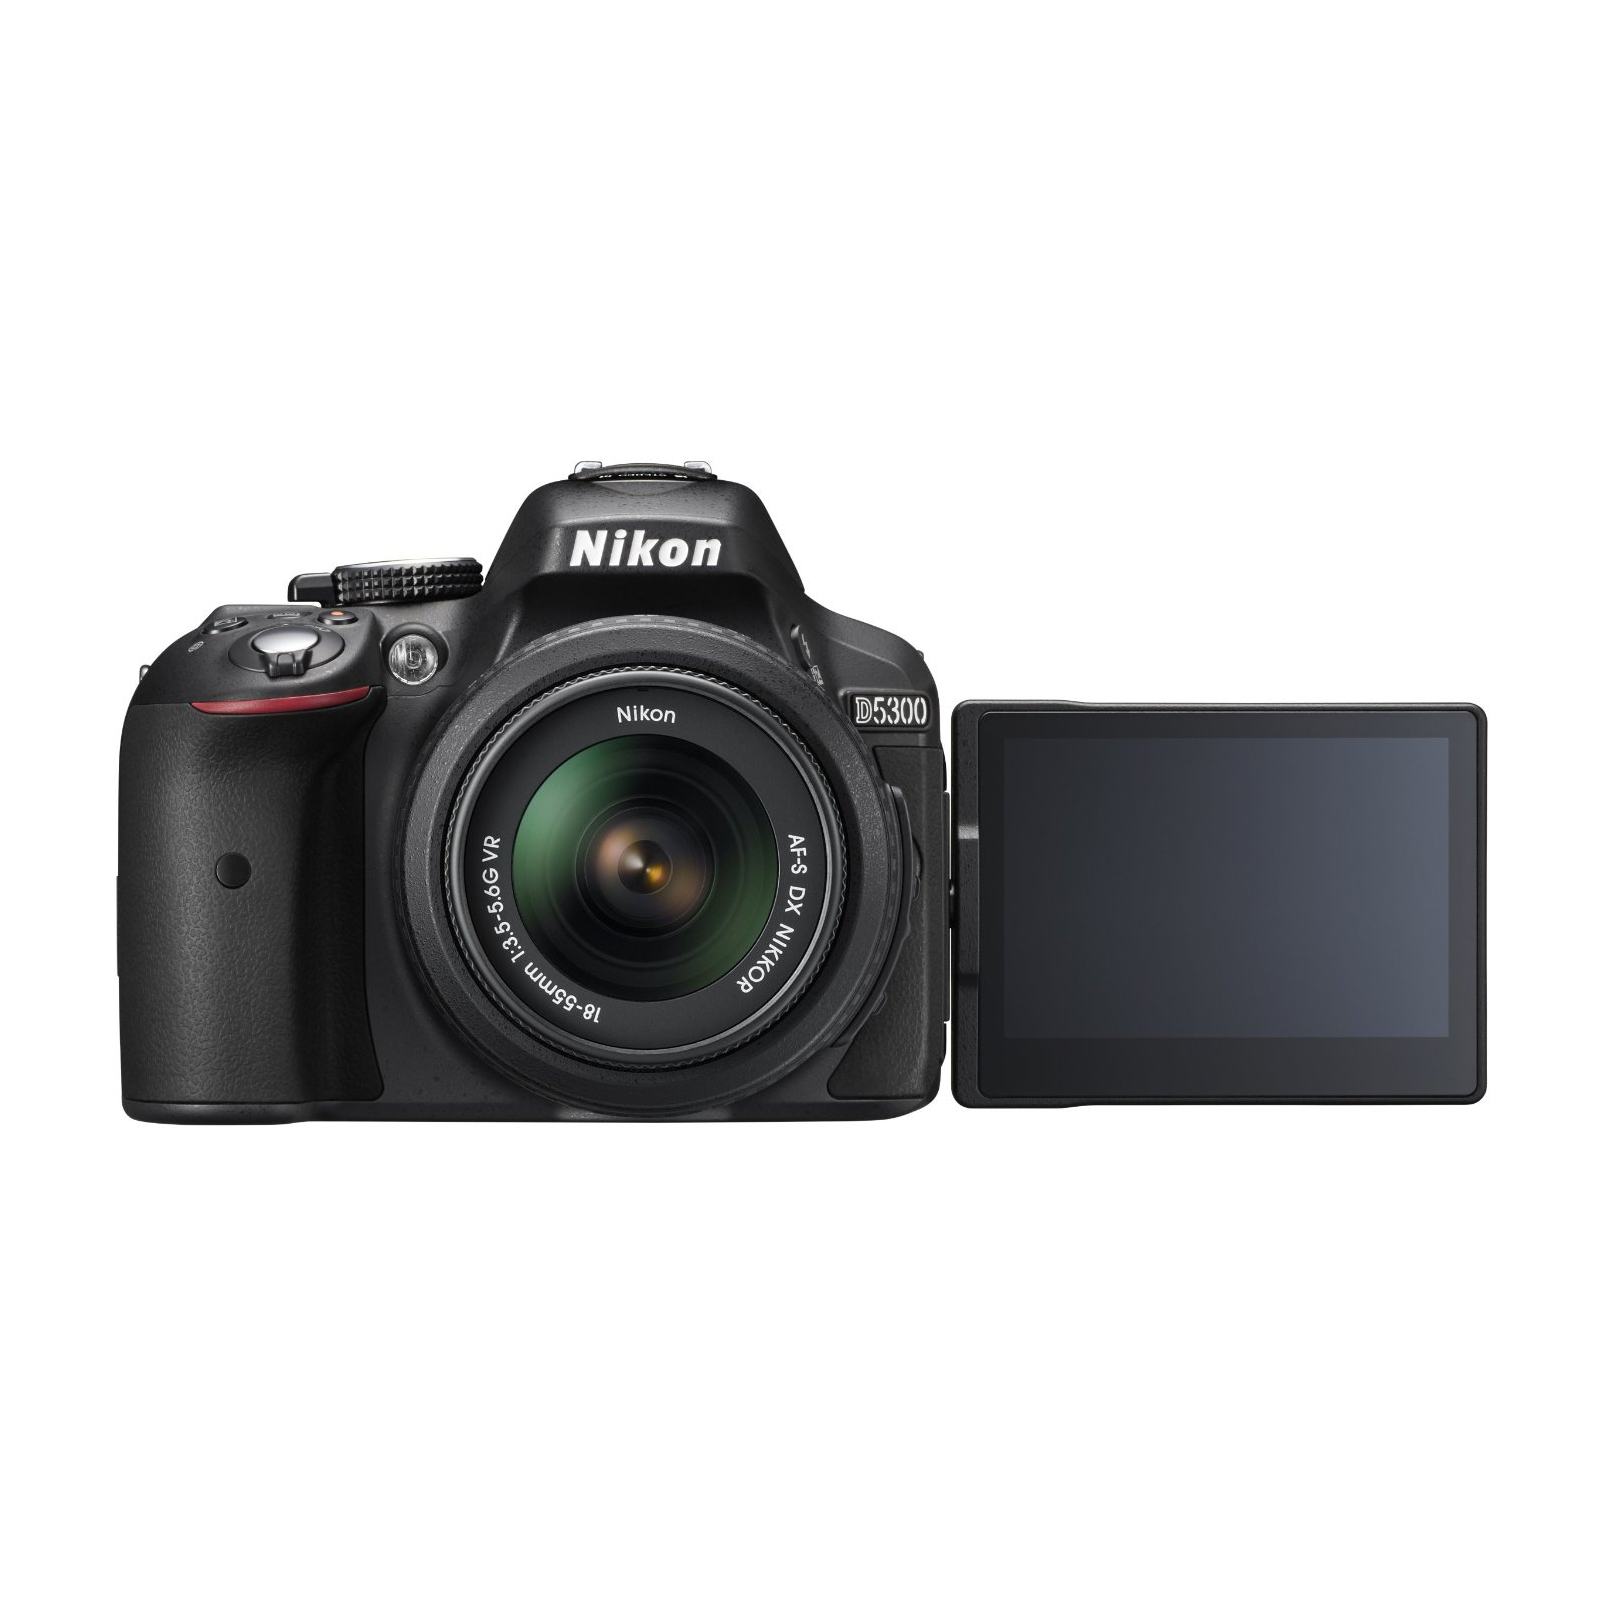 Цифровой фотоаппарат Nikon D5300 18-140 black kit (VBA370KV02/VBA370K002) изображение 4